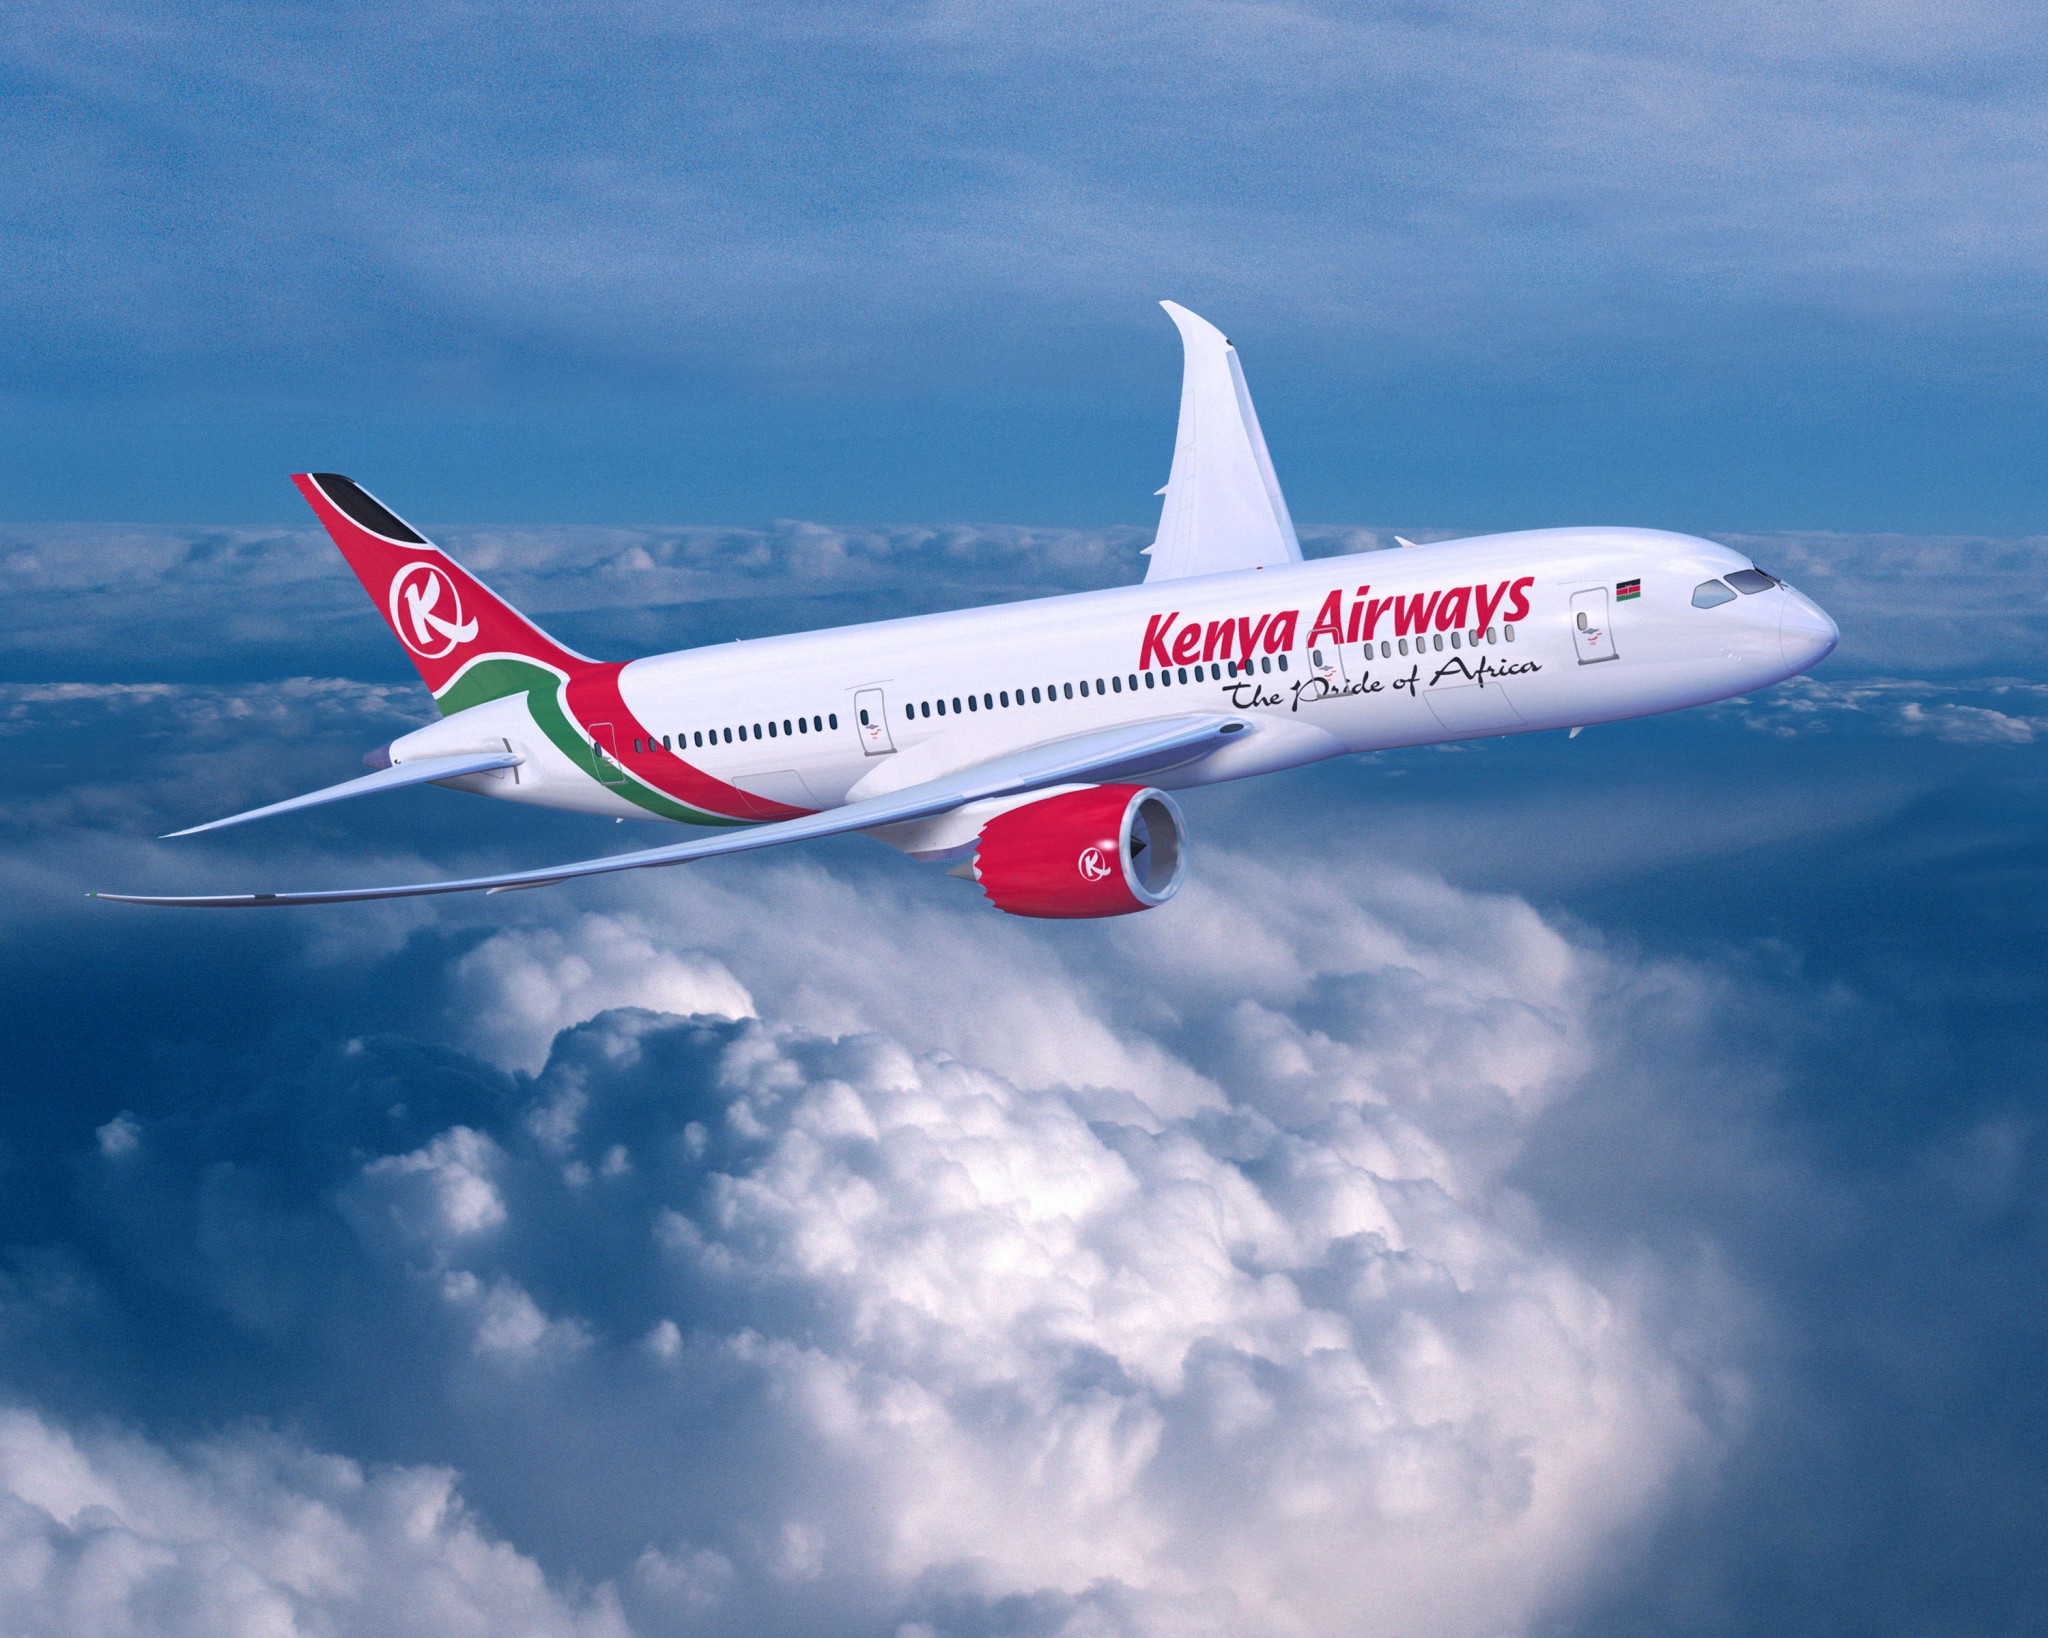 Kenya Airways and Royal Air Maroc resume codeshare after three years